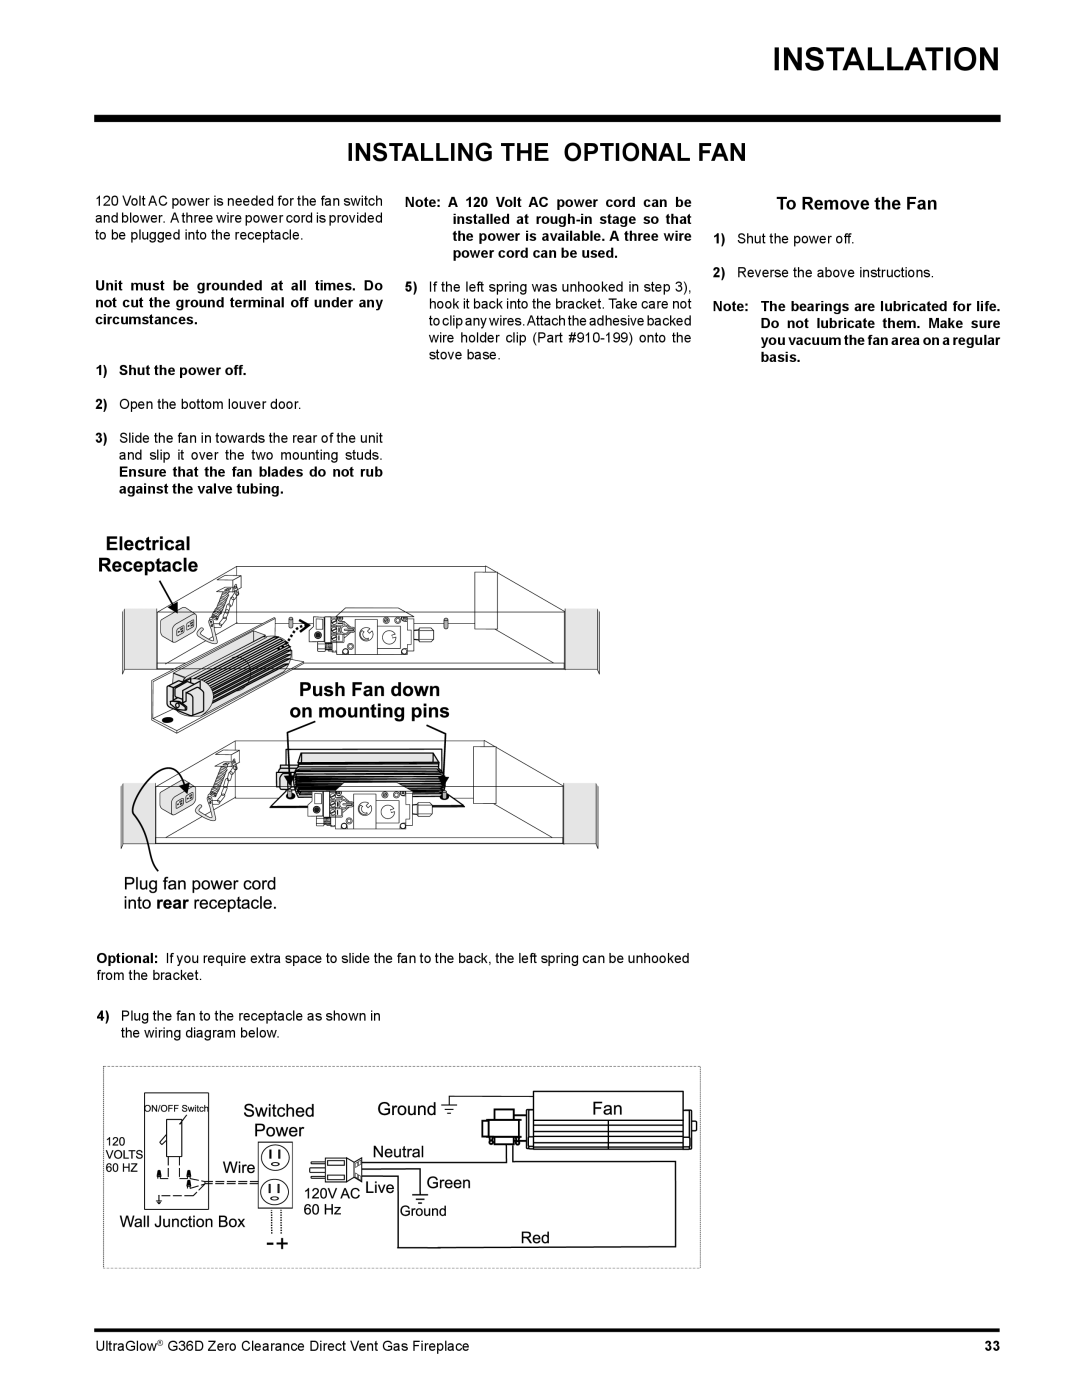 Regency G36D installation manual Installing The Optional Fan, Installation, To Remove the Fan 